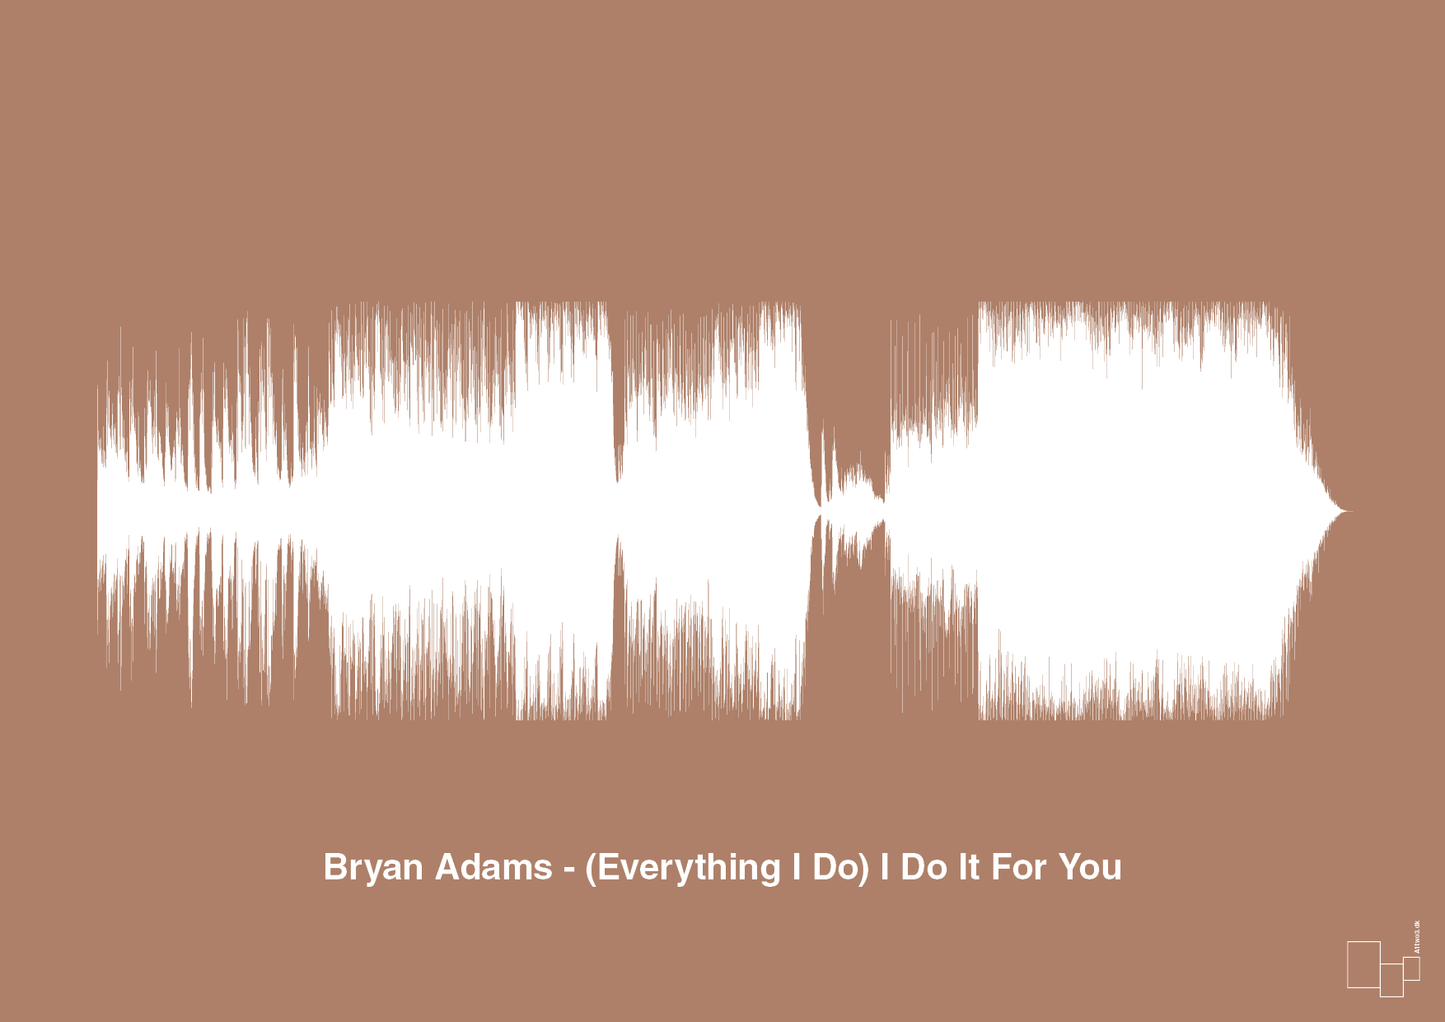 bryan adams - (everything i do) i do it for you - Plakat med Musik i Cider Spice